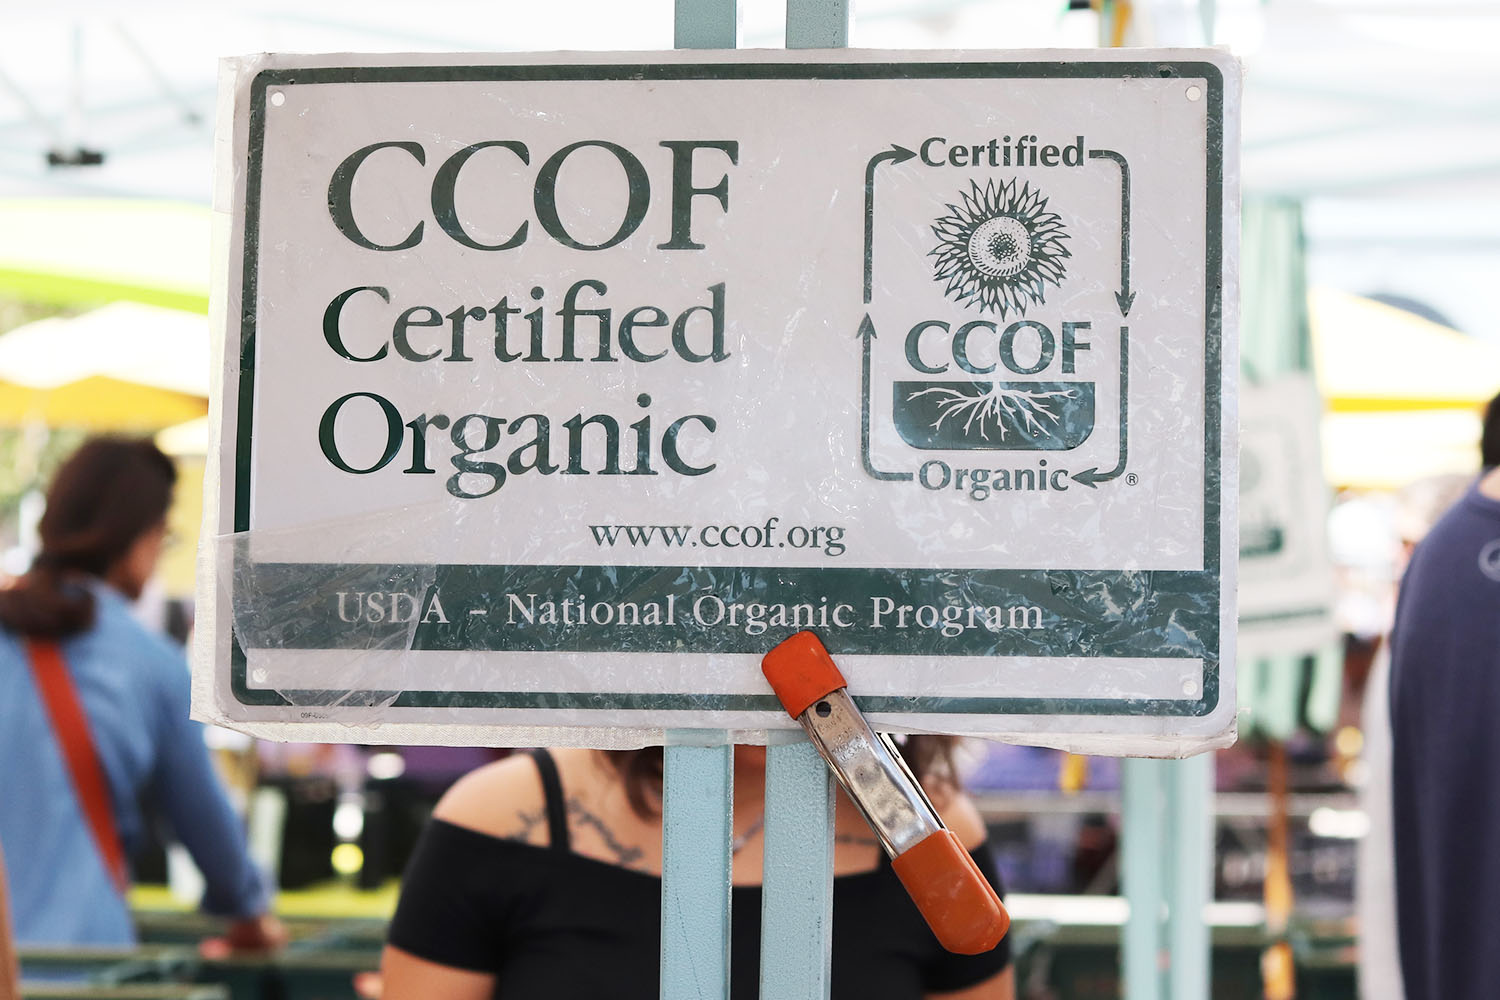 CCOF Certified Organic sign